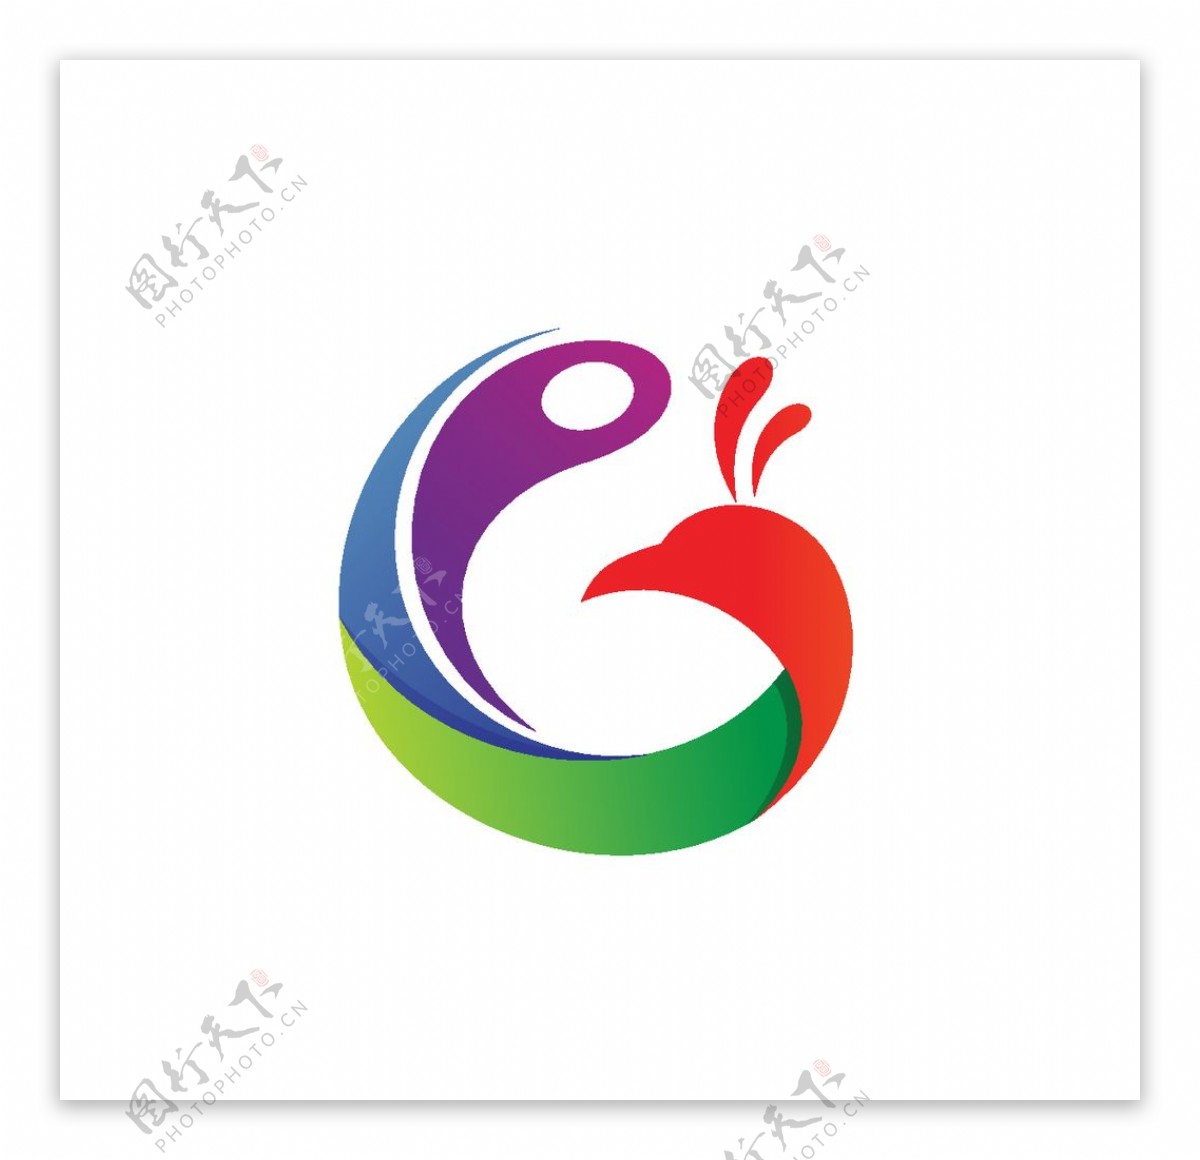 孔雀logo